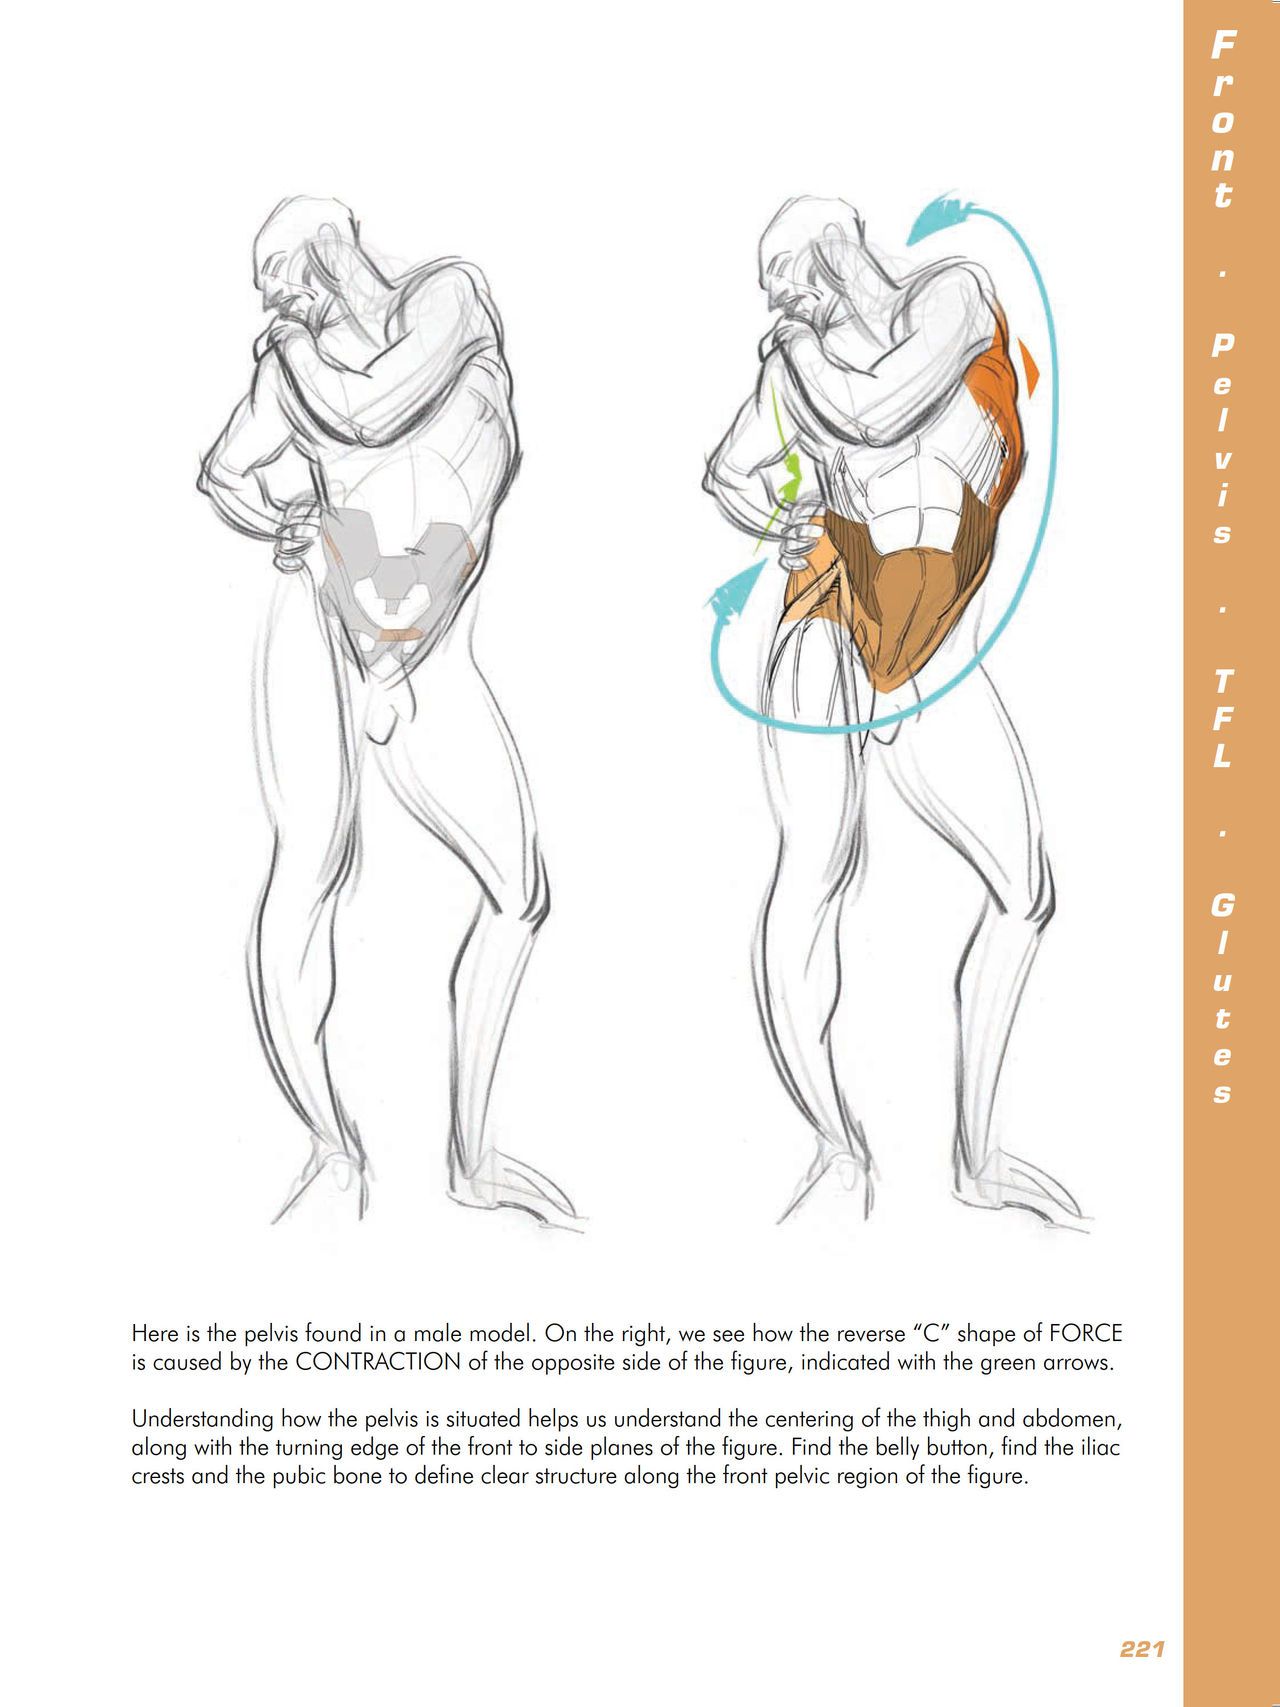 Force. Drawing human anatomy - Michael D. Mattesi [Digital] 242